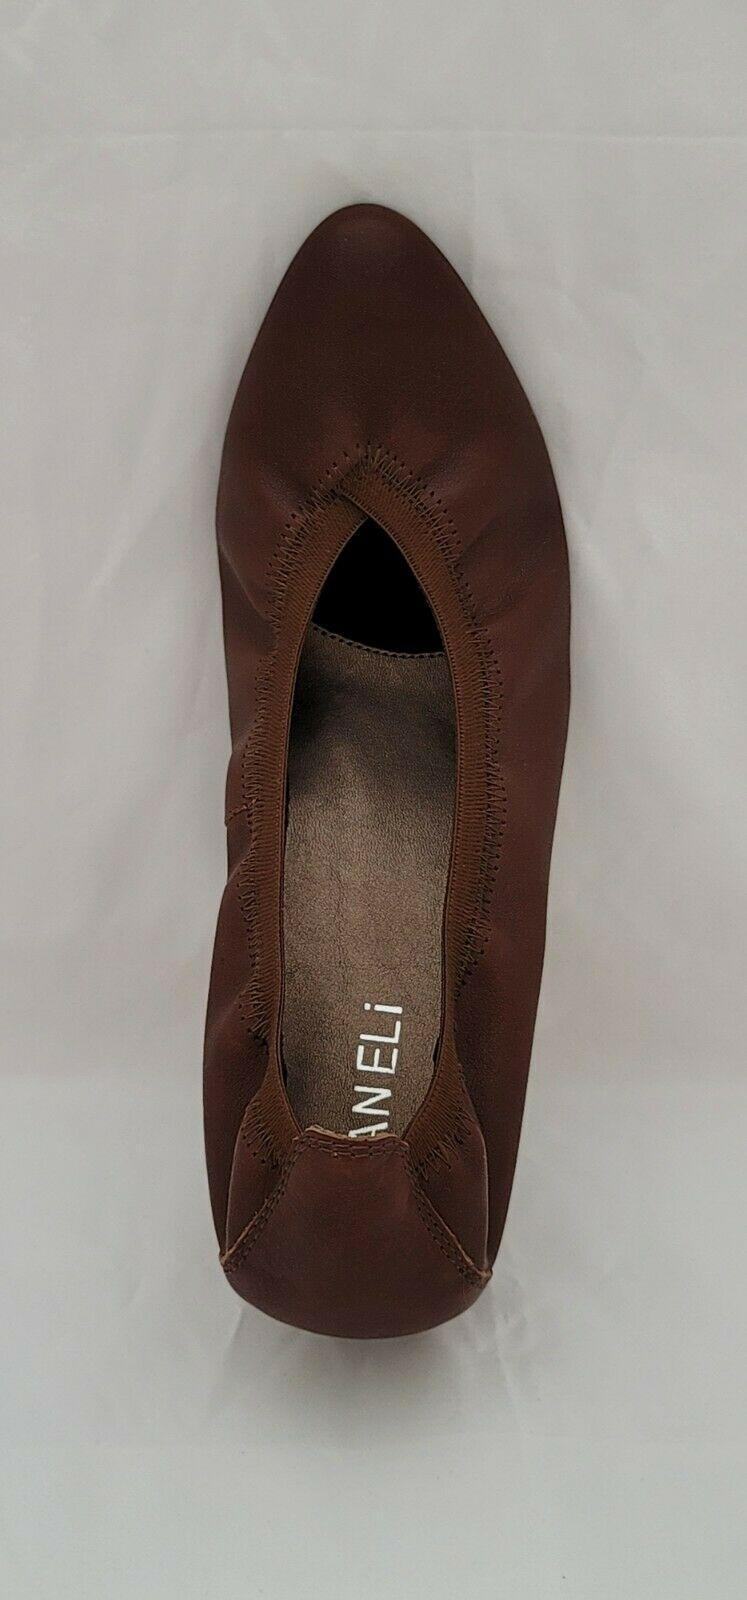 Vaneli Brown Leather Pump with Elasticized Topline Comfort Shoes US 8 M - SVNYFancy